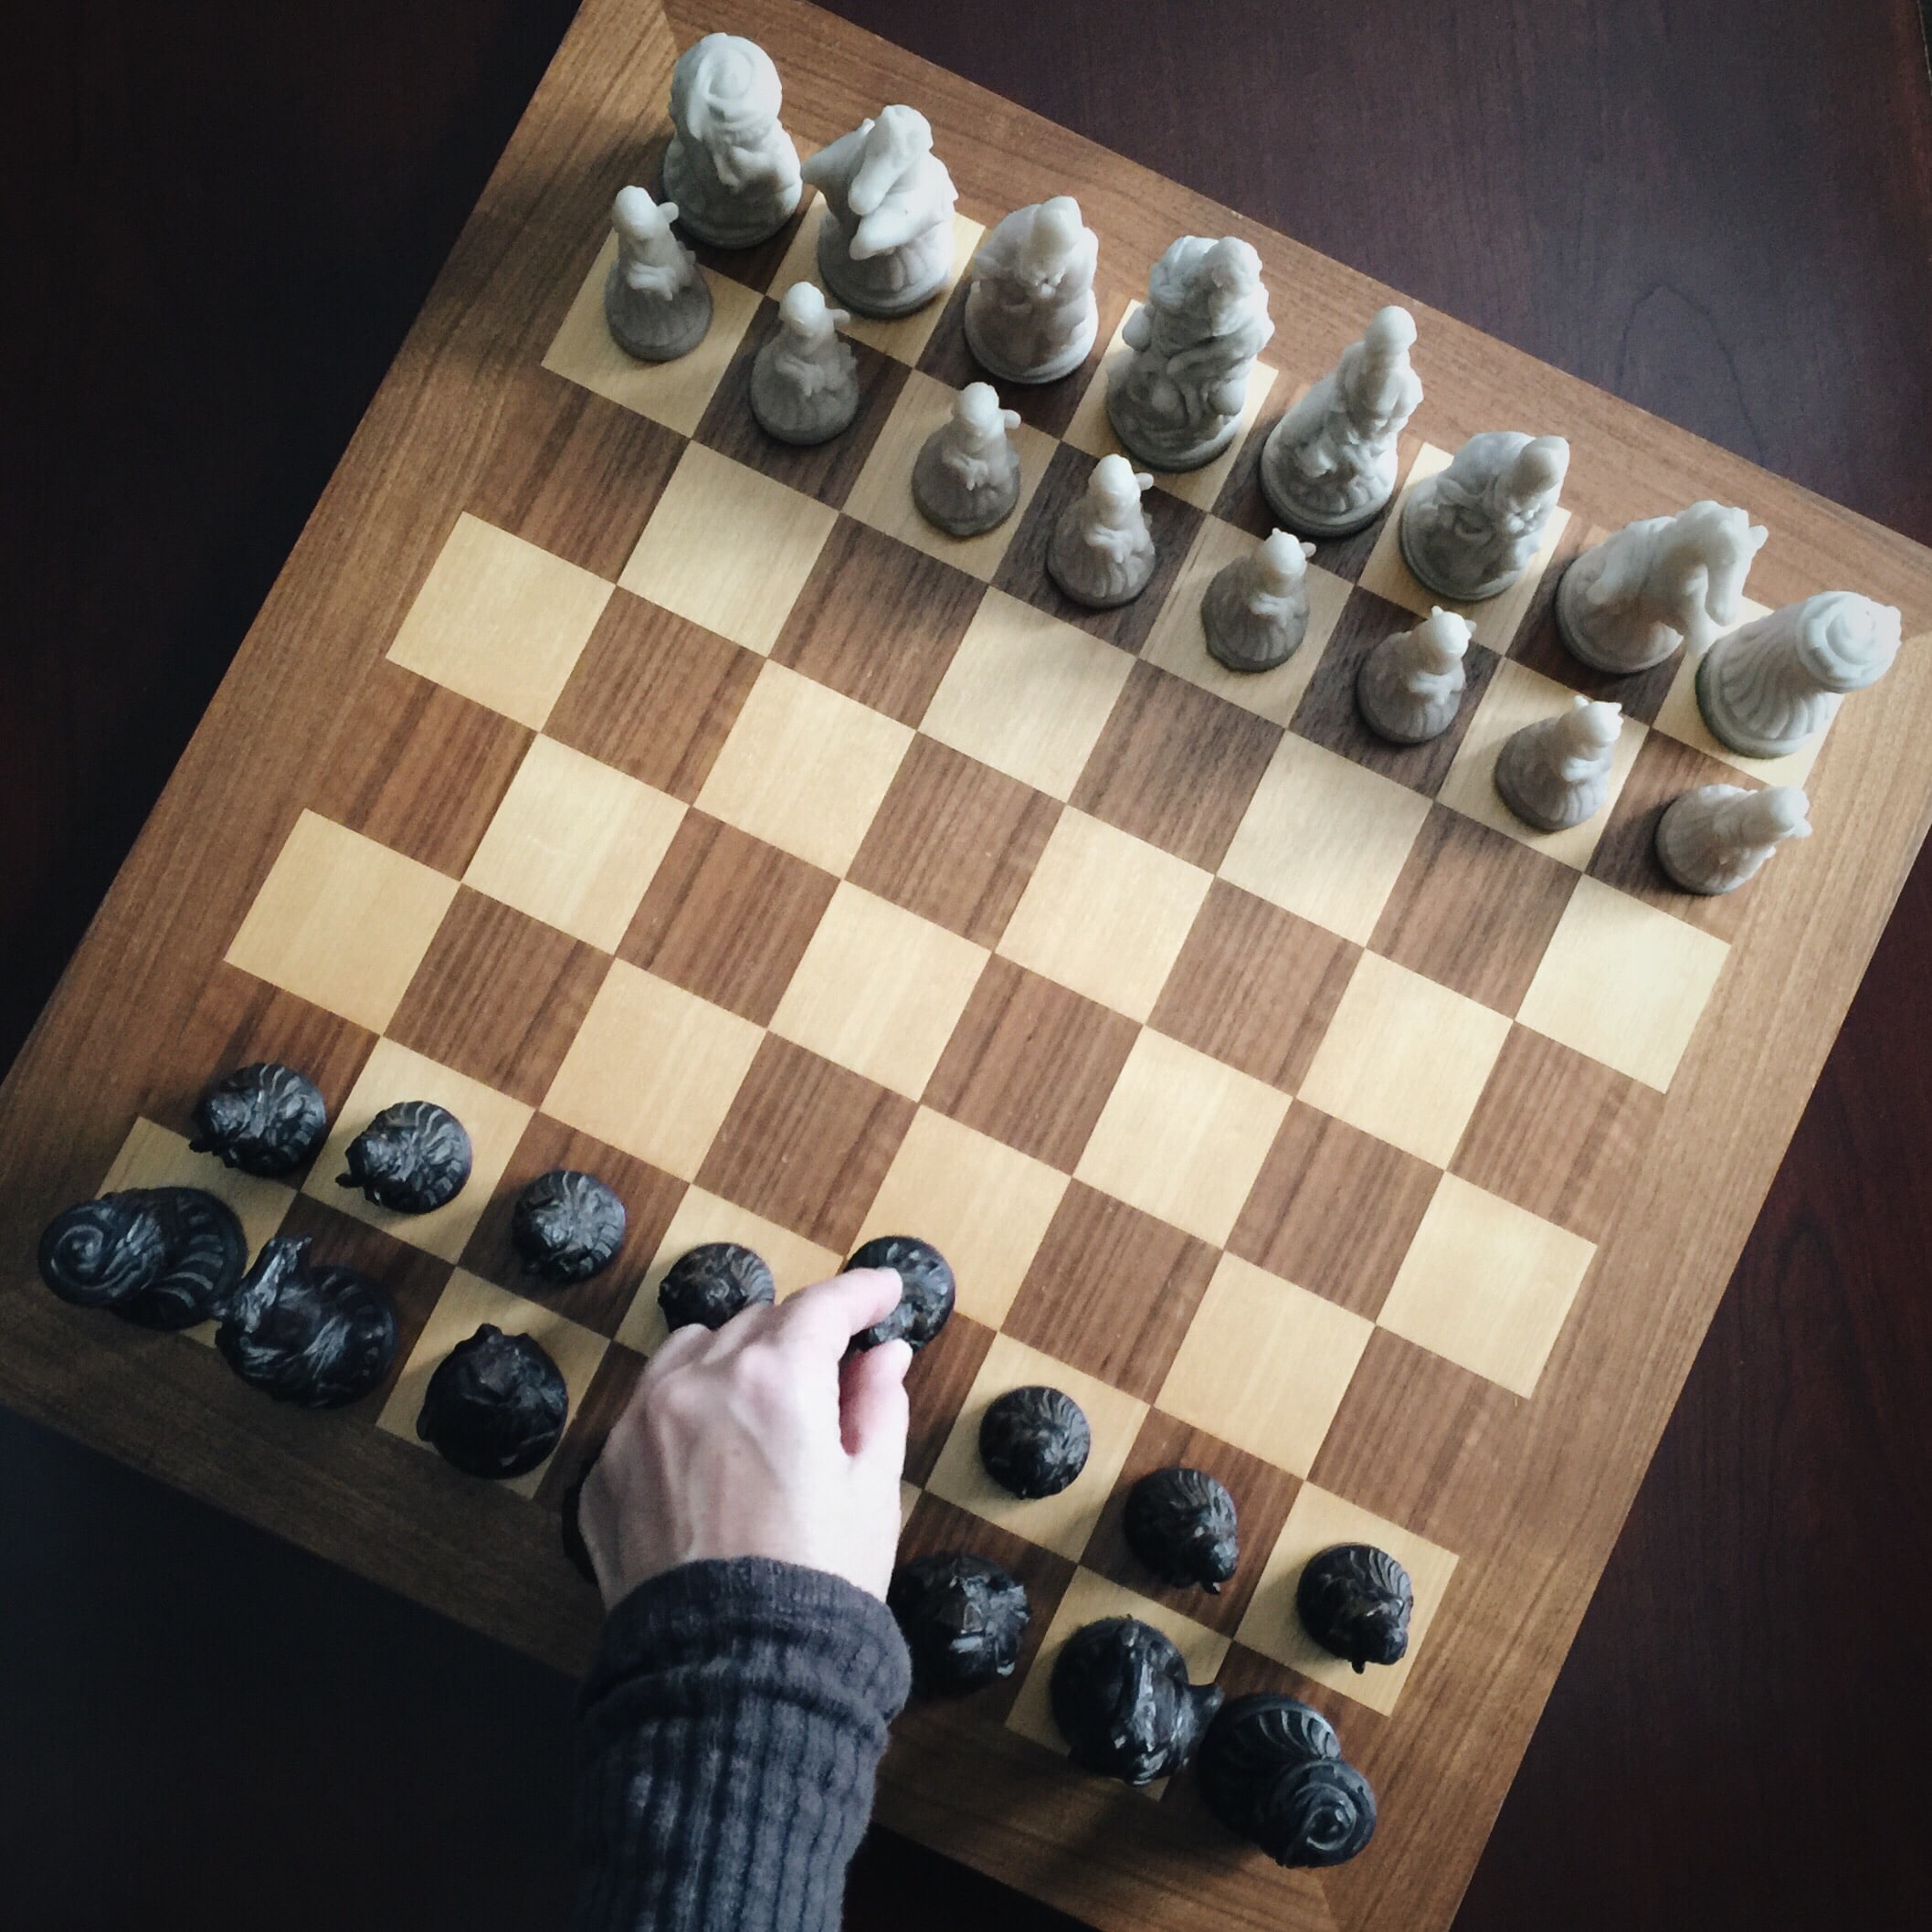 gary kasparov chess games